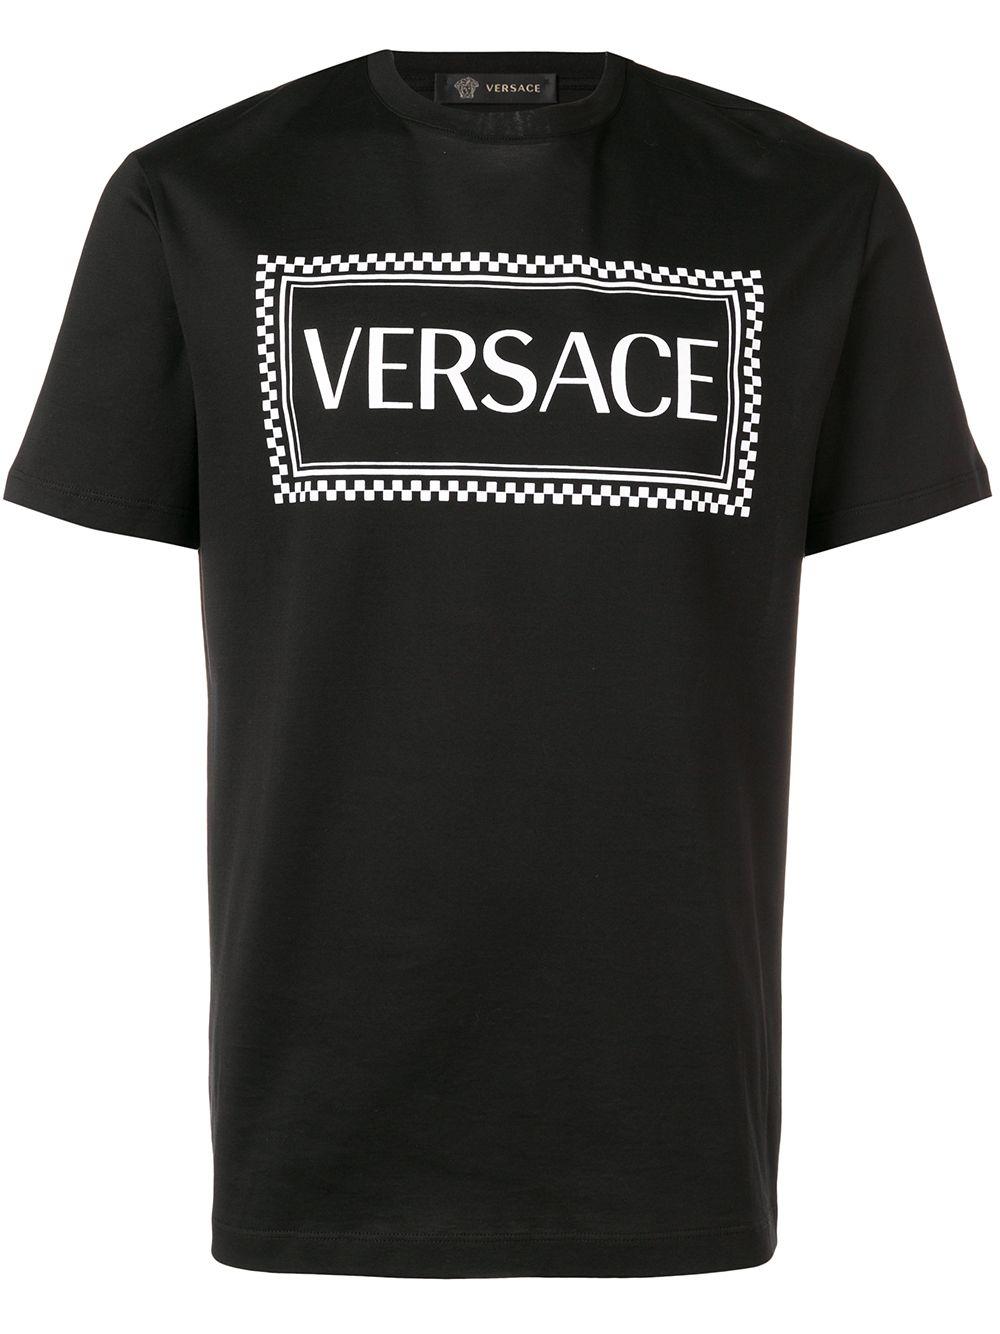 Versace Logo Check Print Cotton T Shirt in Nero (Black) for Men - Save ...